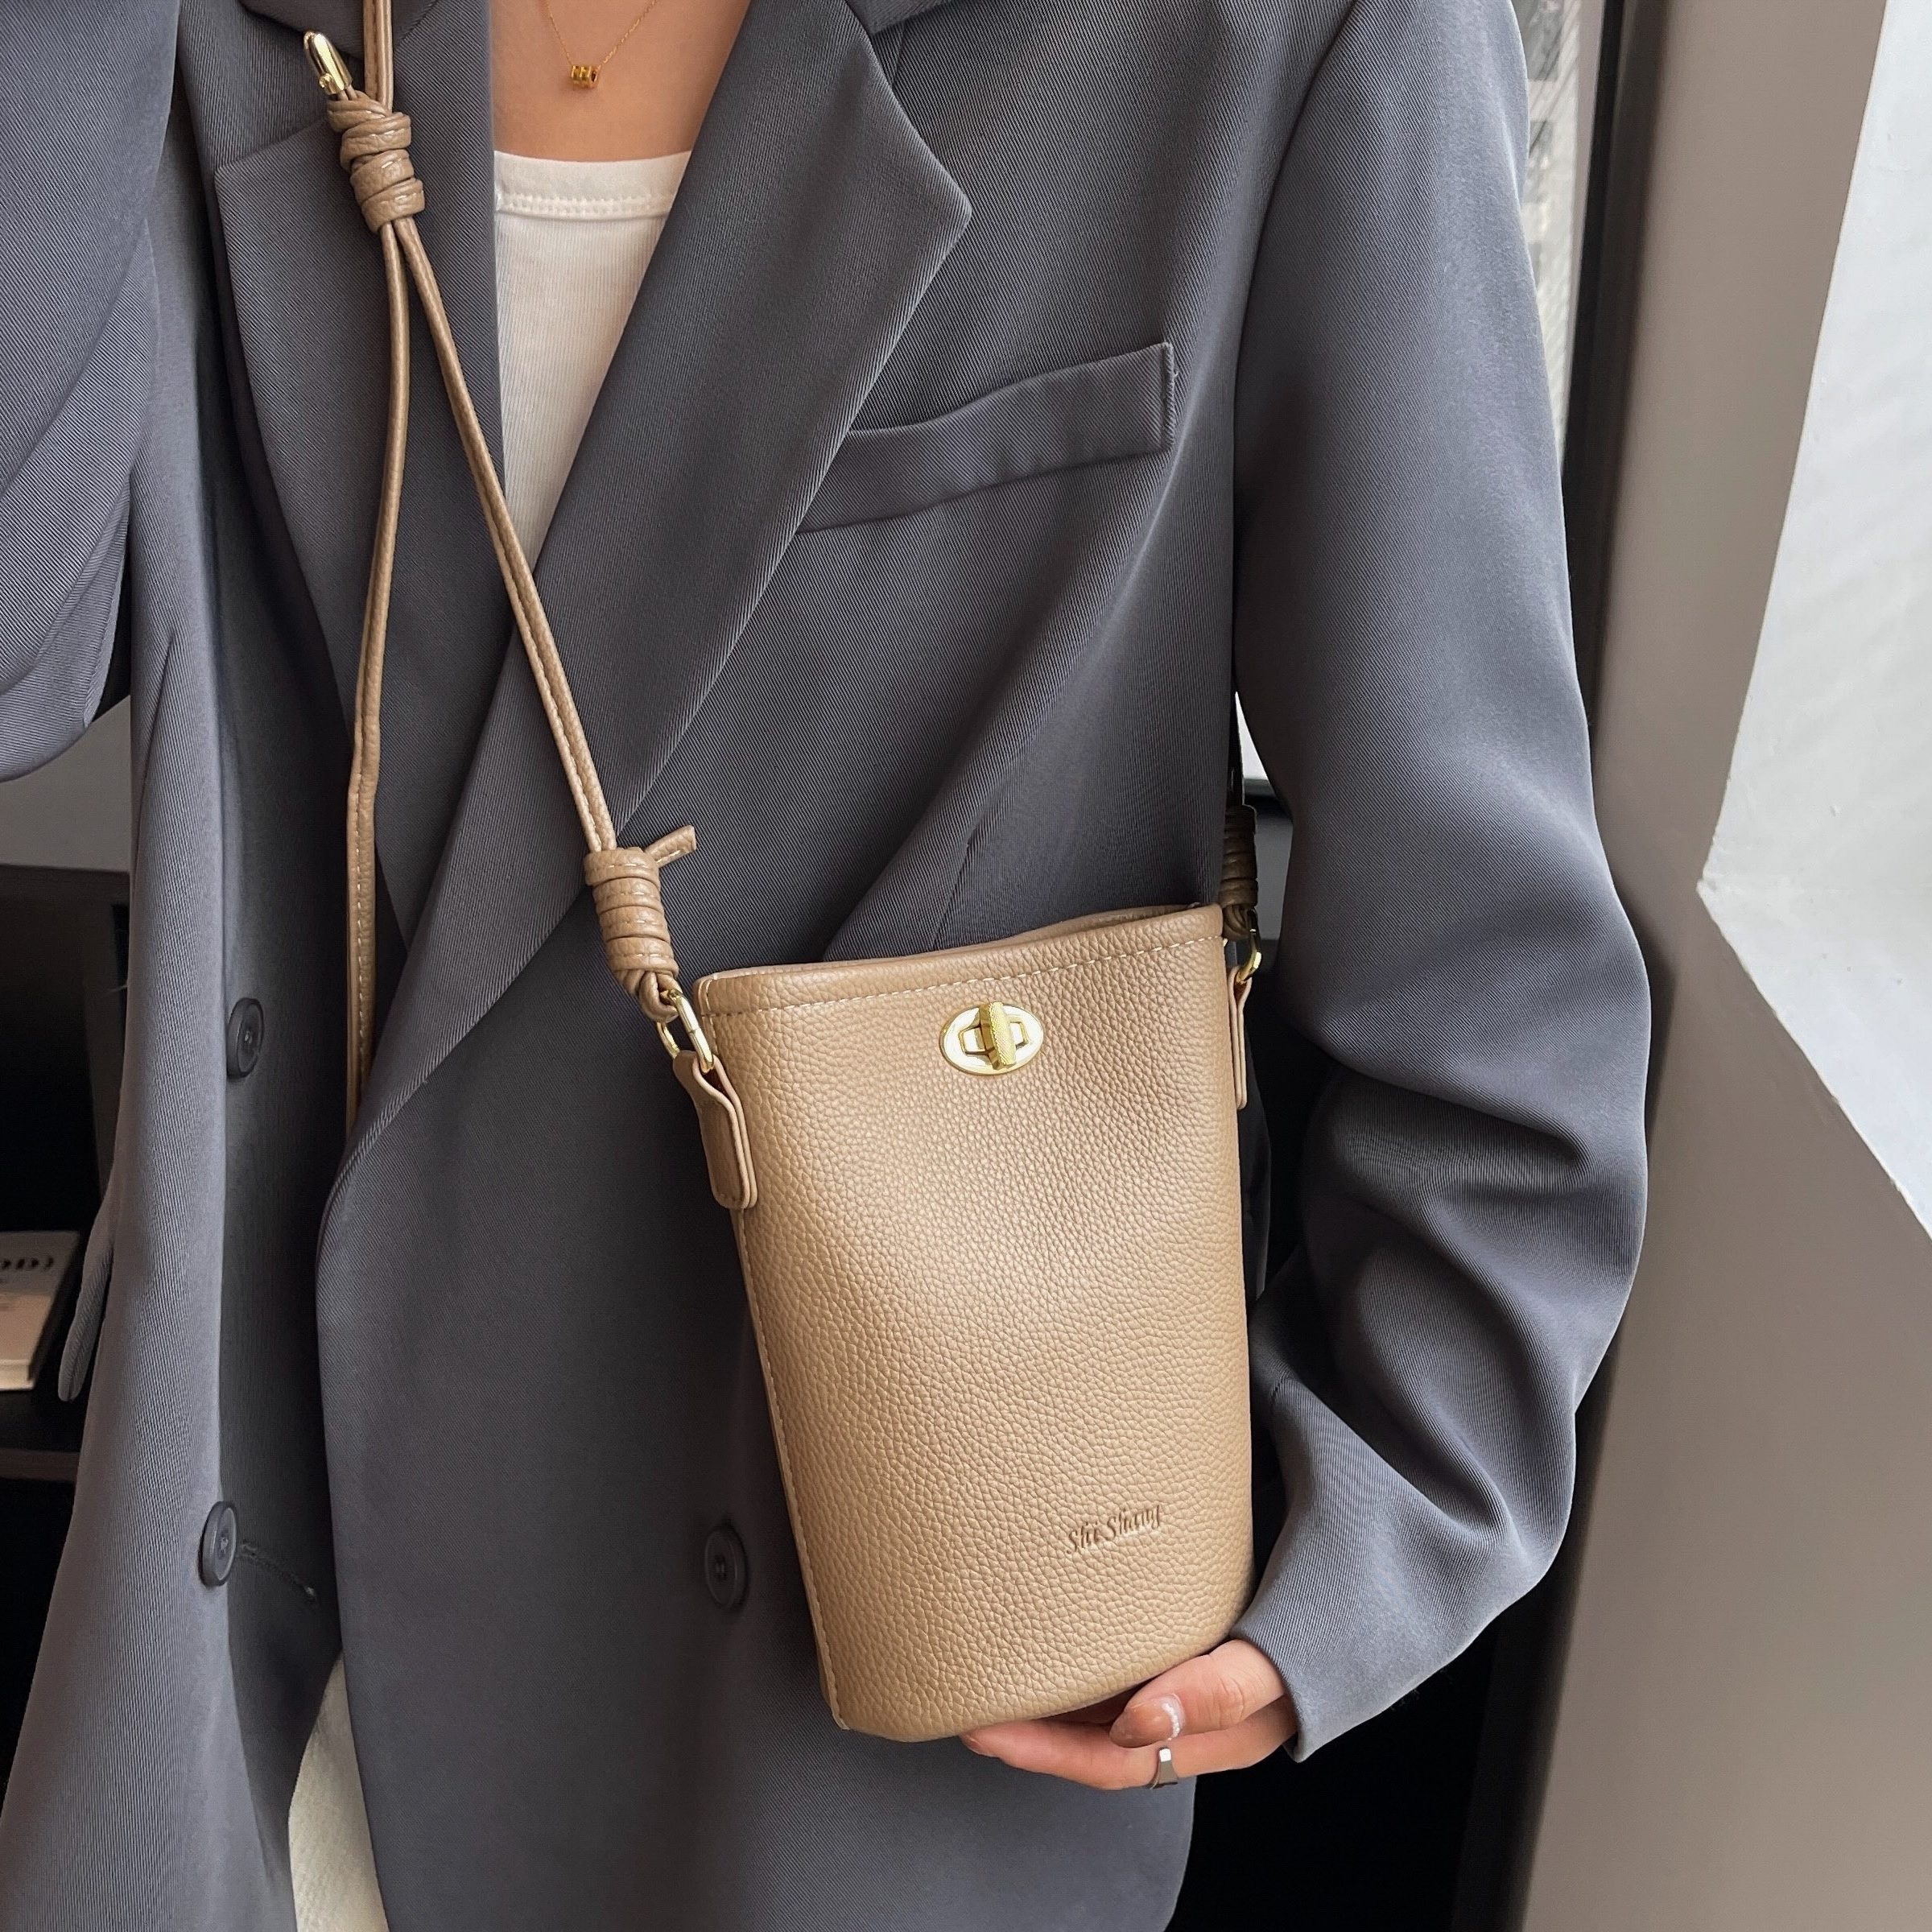 Twist Mini bag in gold leather